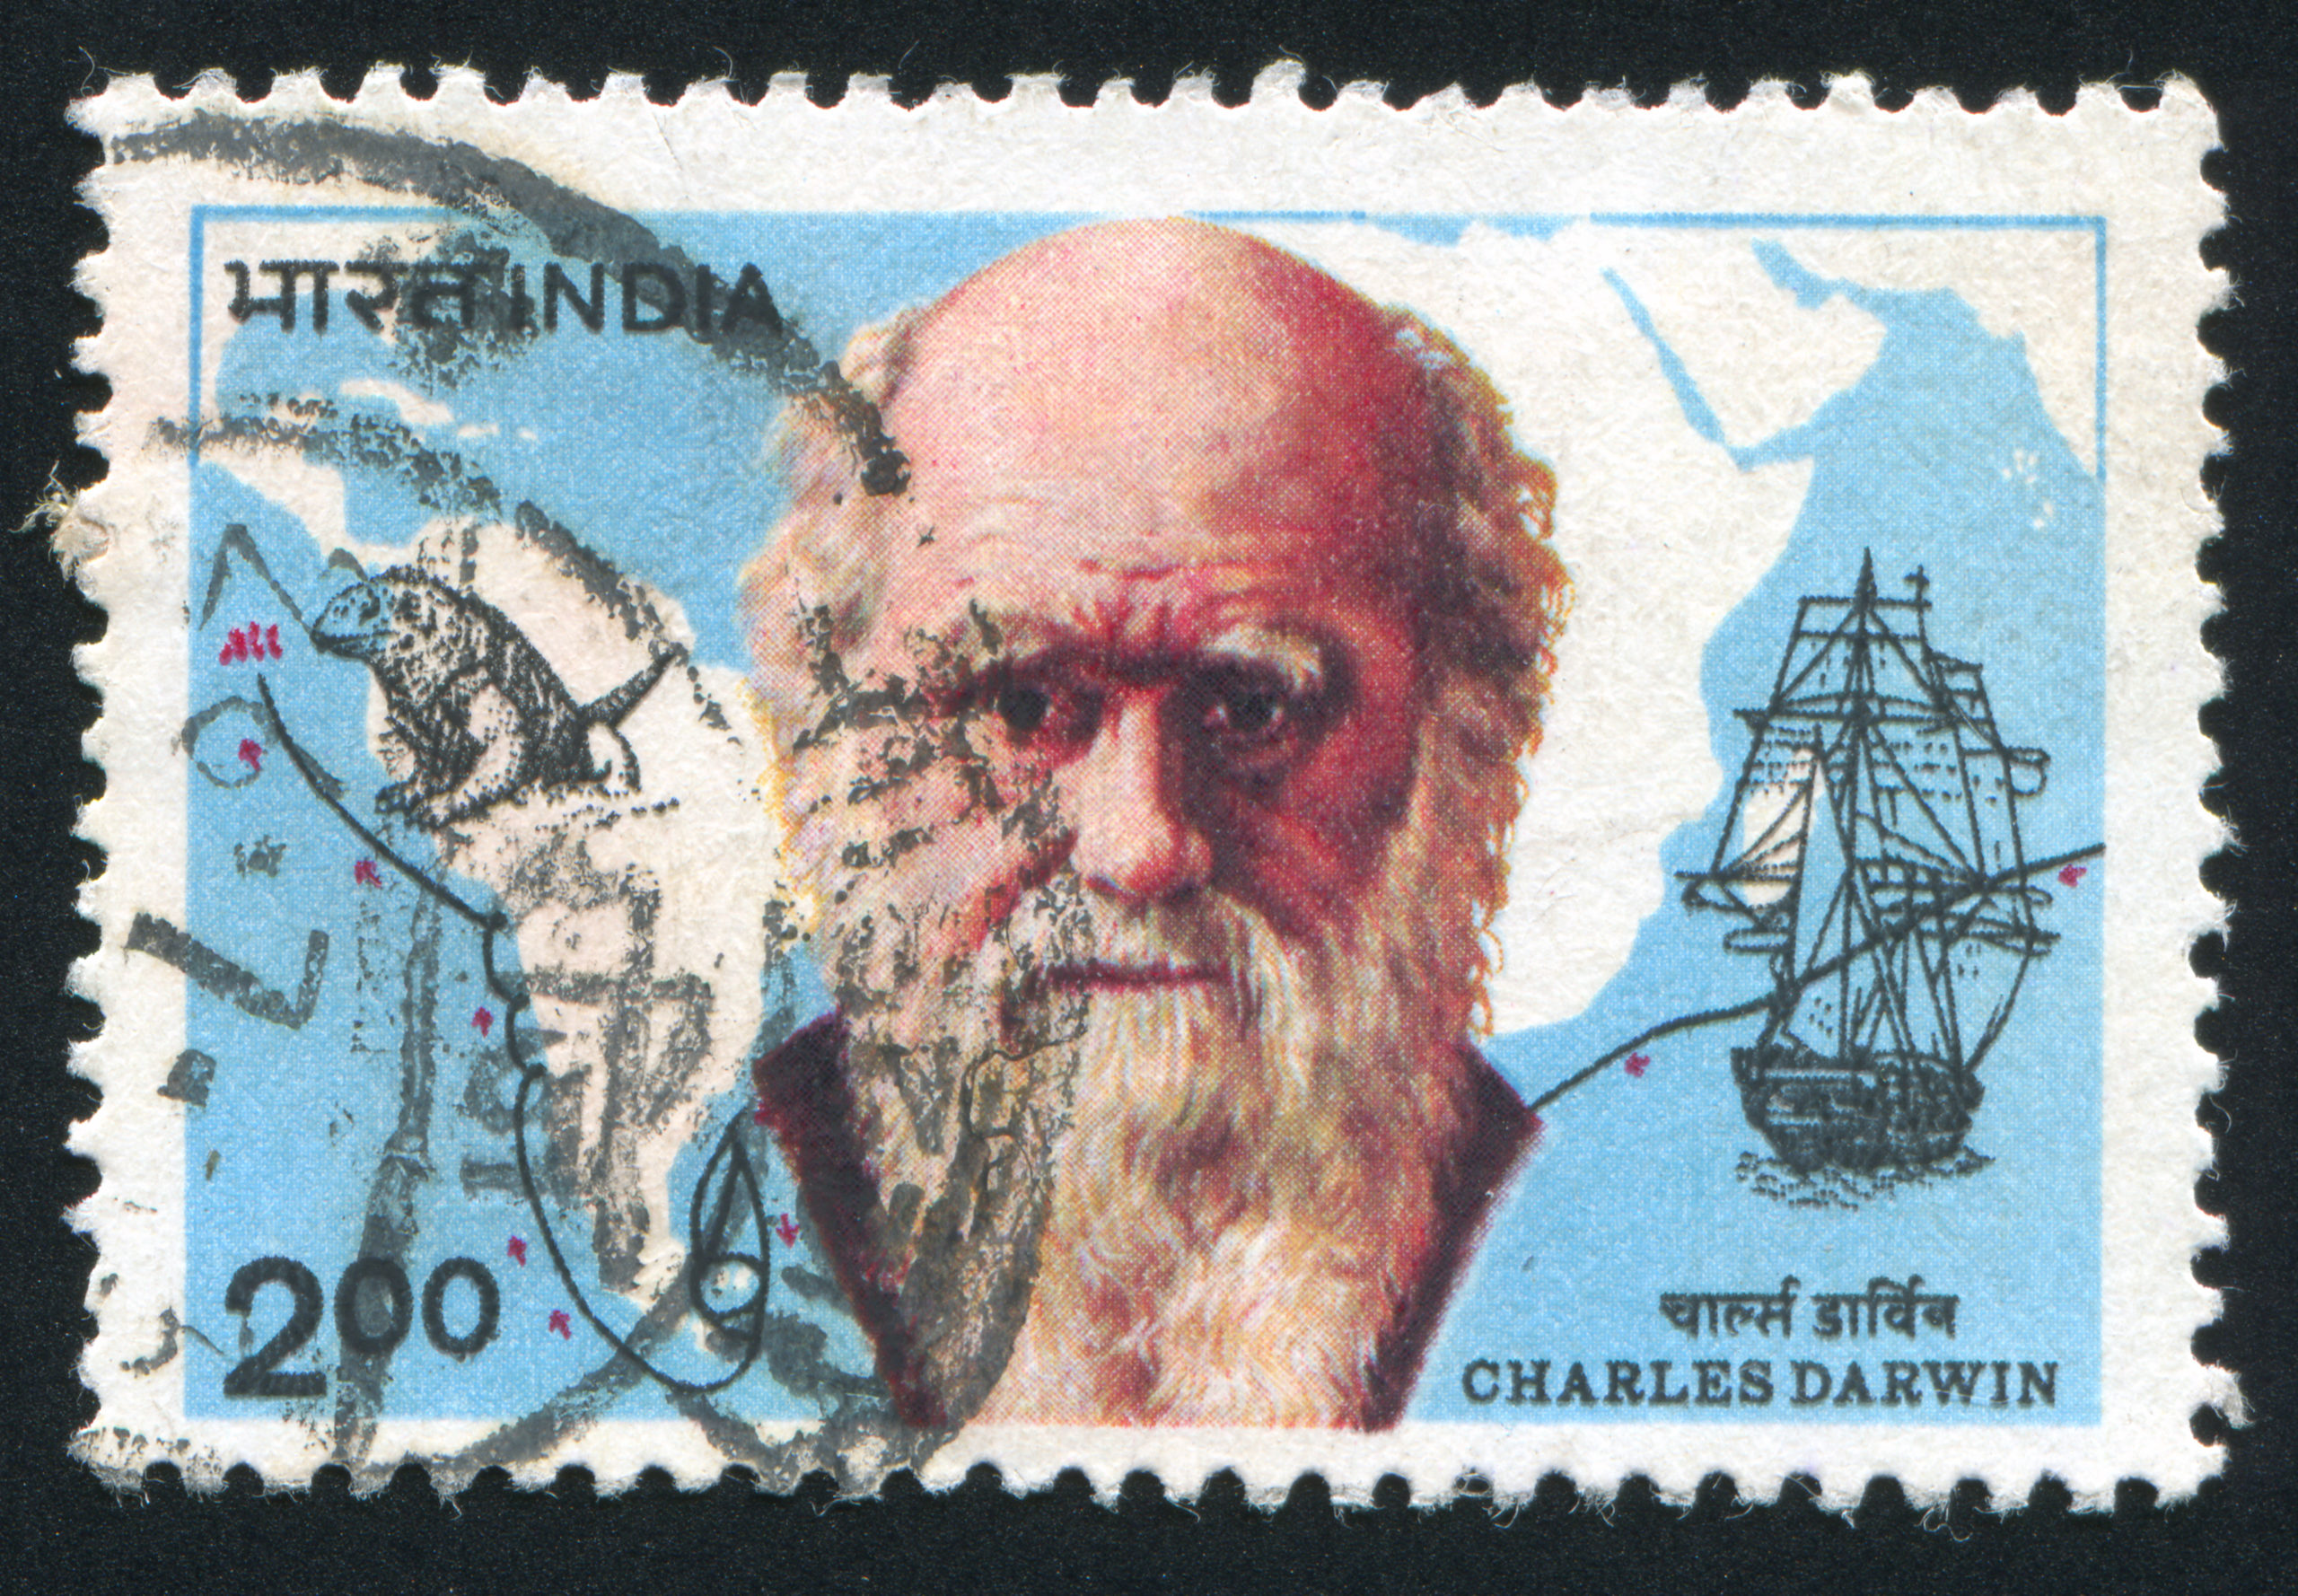 Charles Darwin on India postage stamp